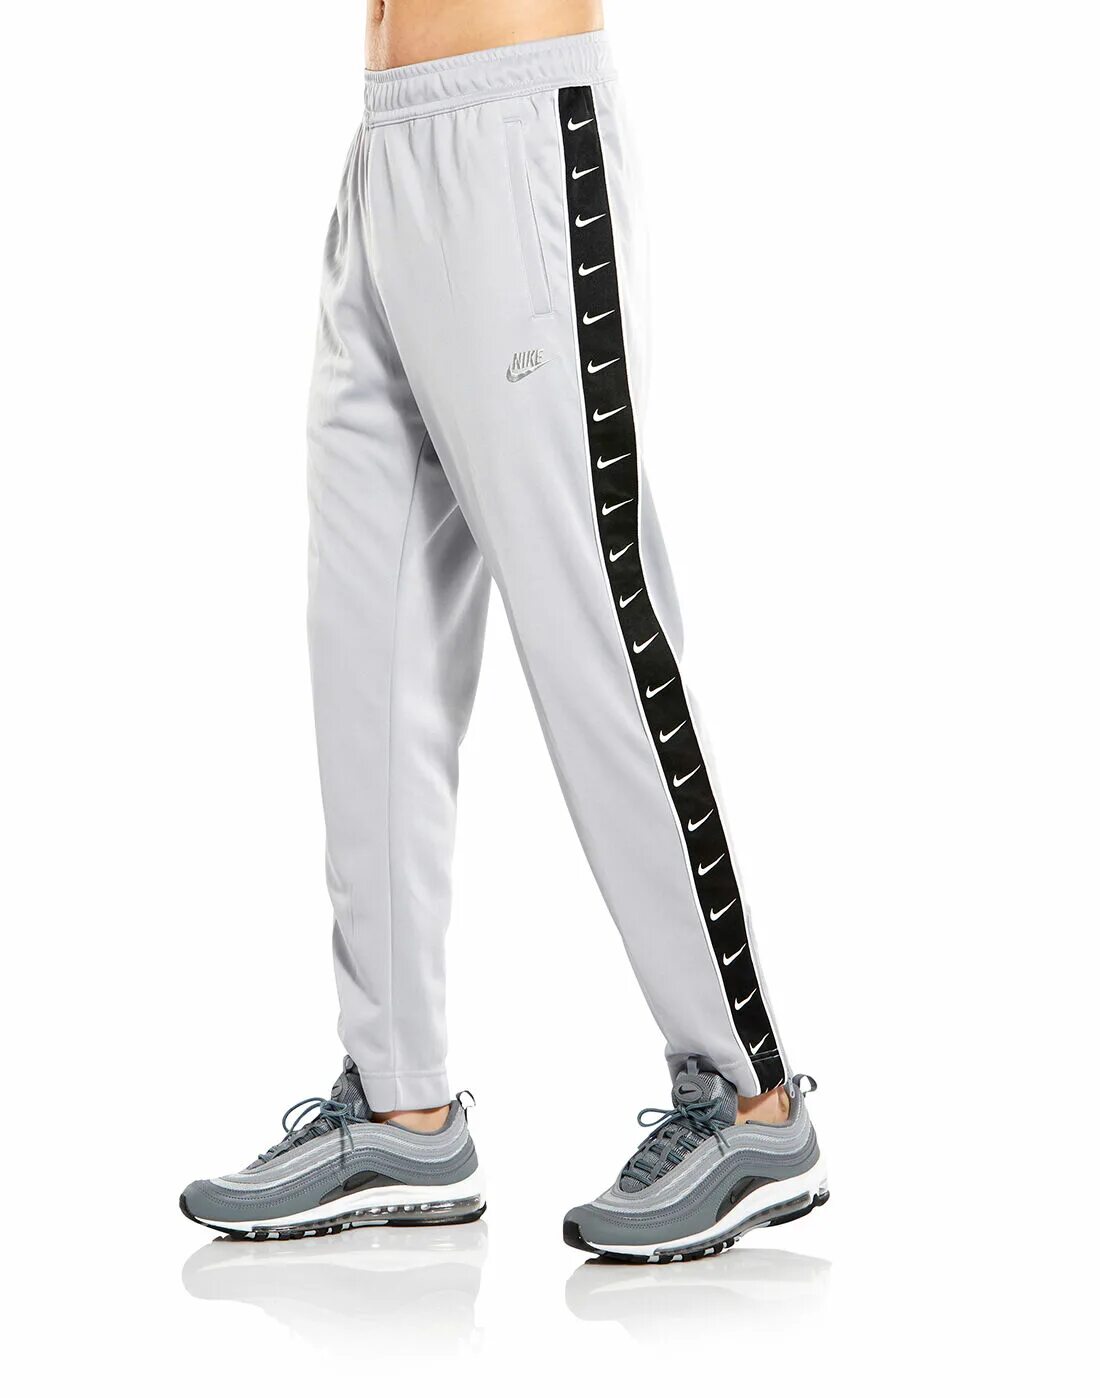 Nike Woven Swoosh track Pants. Nike Sportswear track Pants. Nike track Pants 2000s. Nike Tapered Pants. Track pants nike